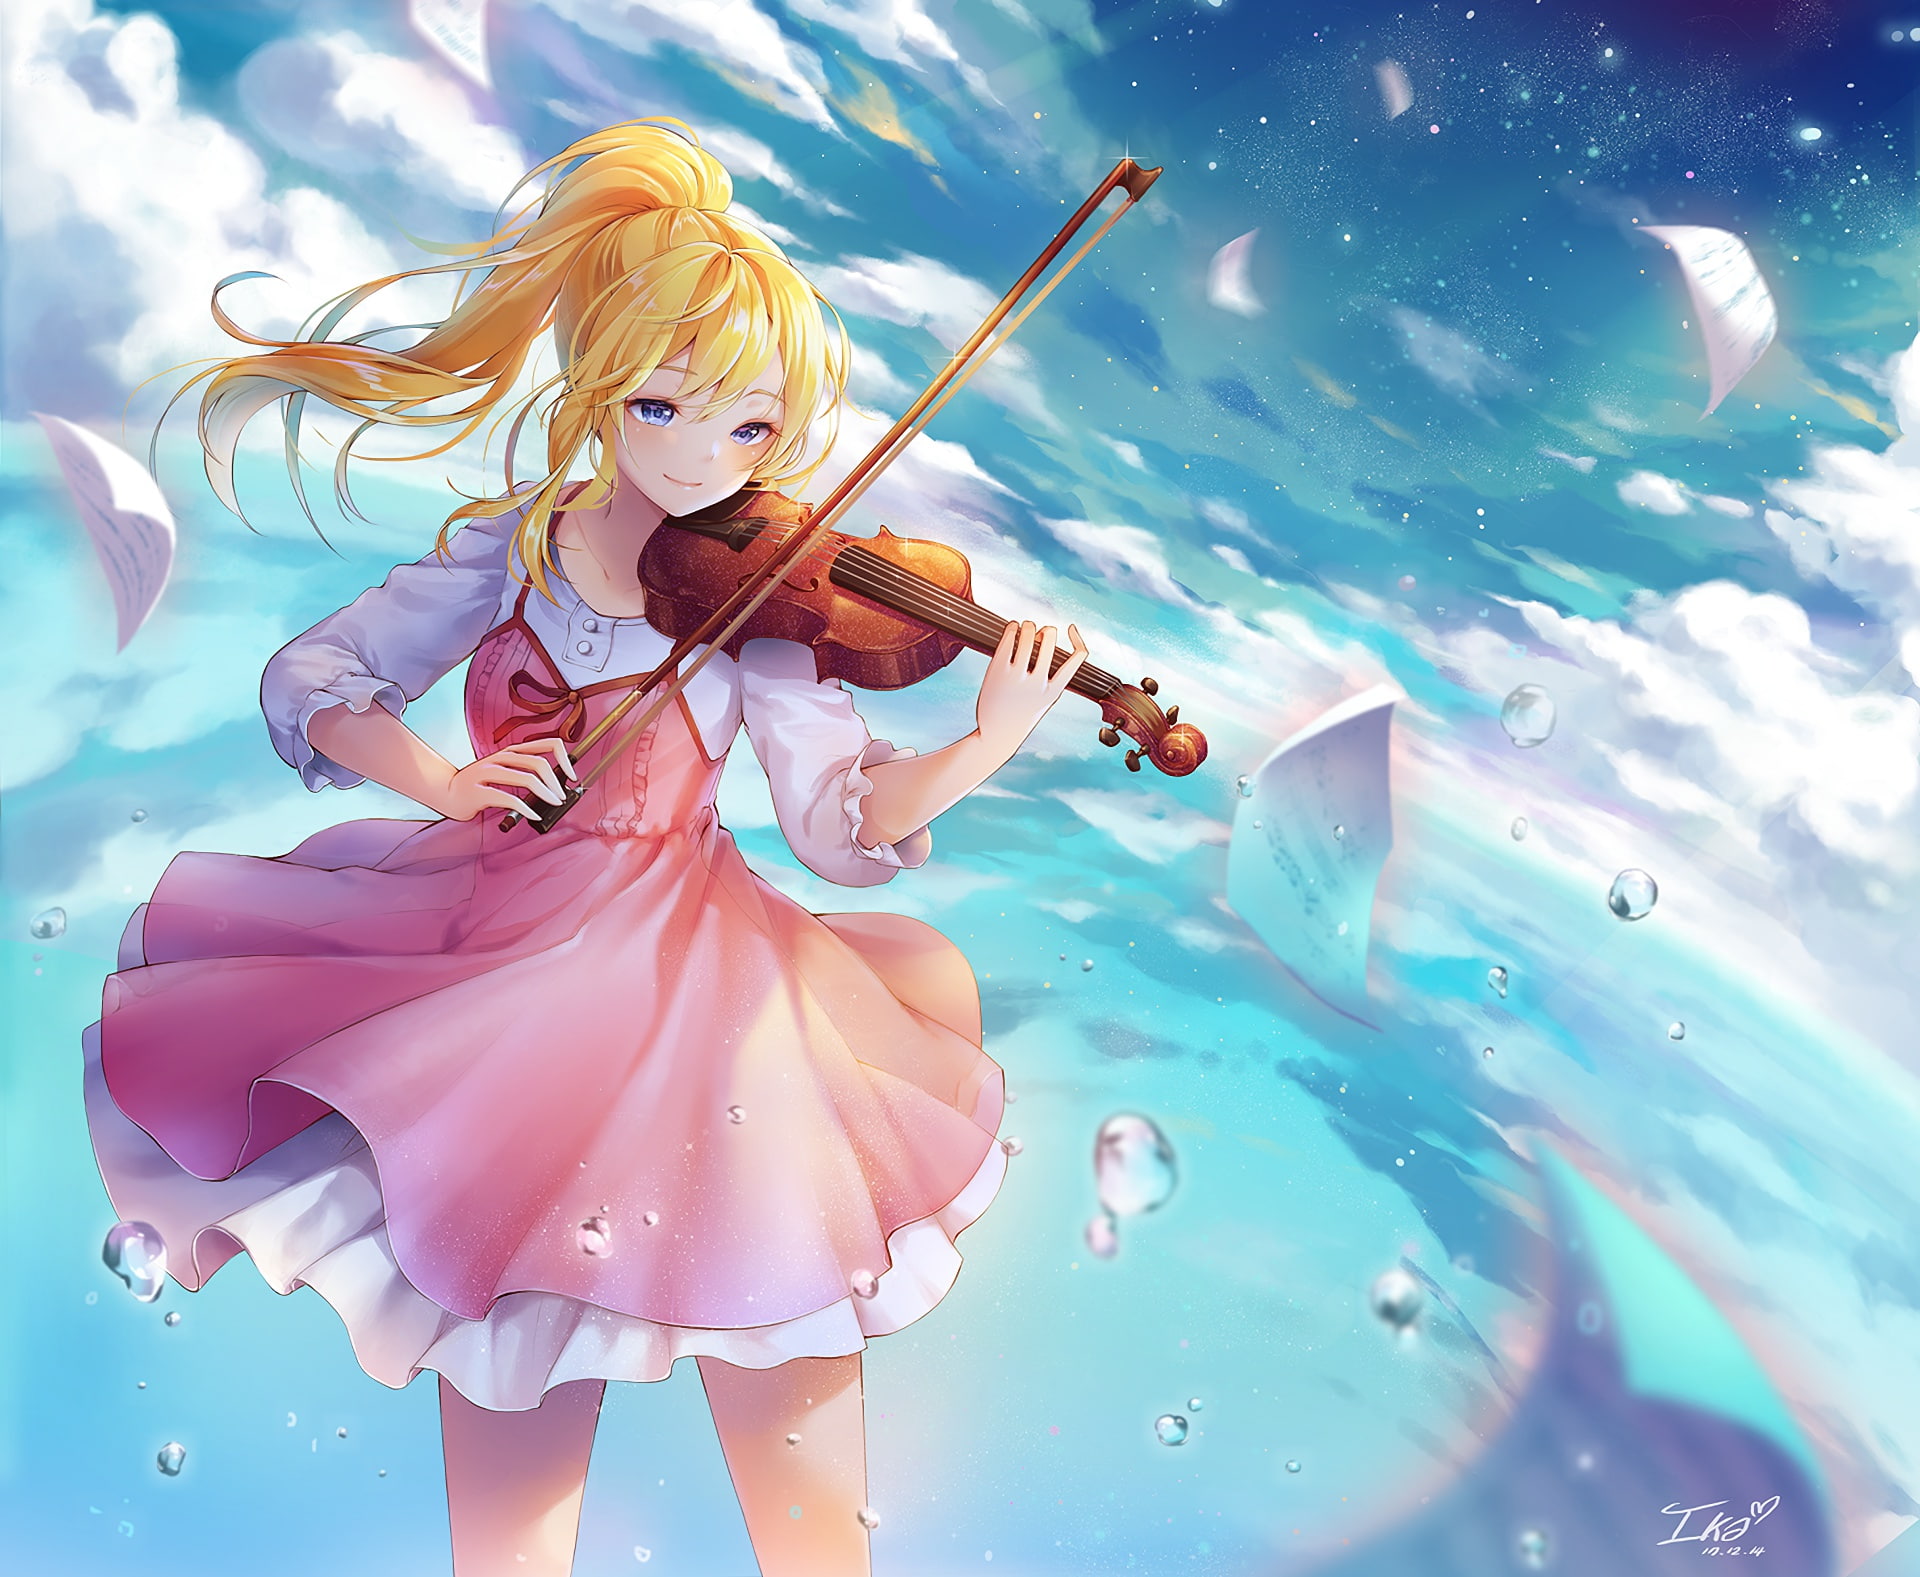 Playing Violin | page 21 of 49 - Zerochan Anime Image Board